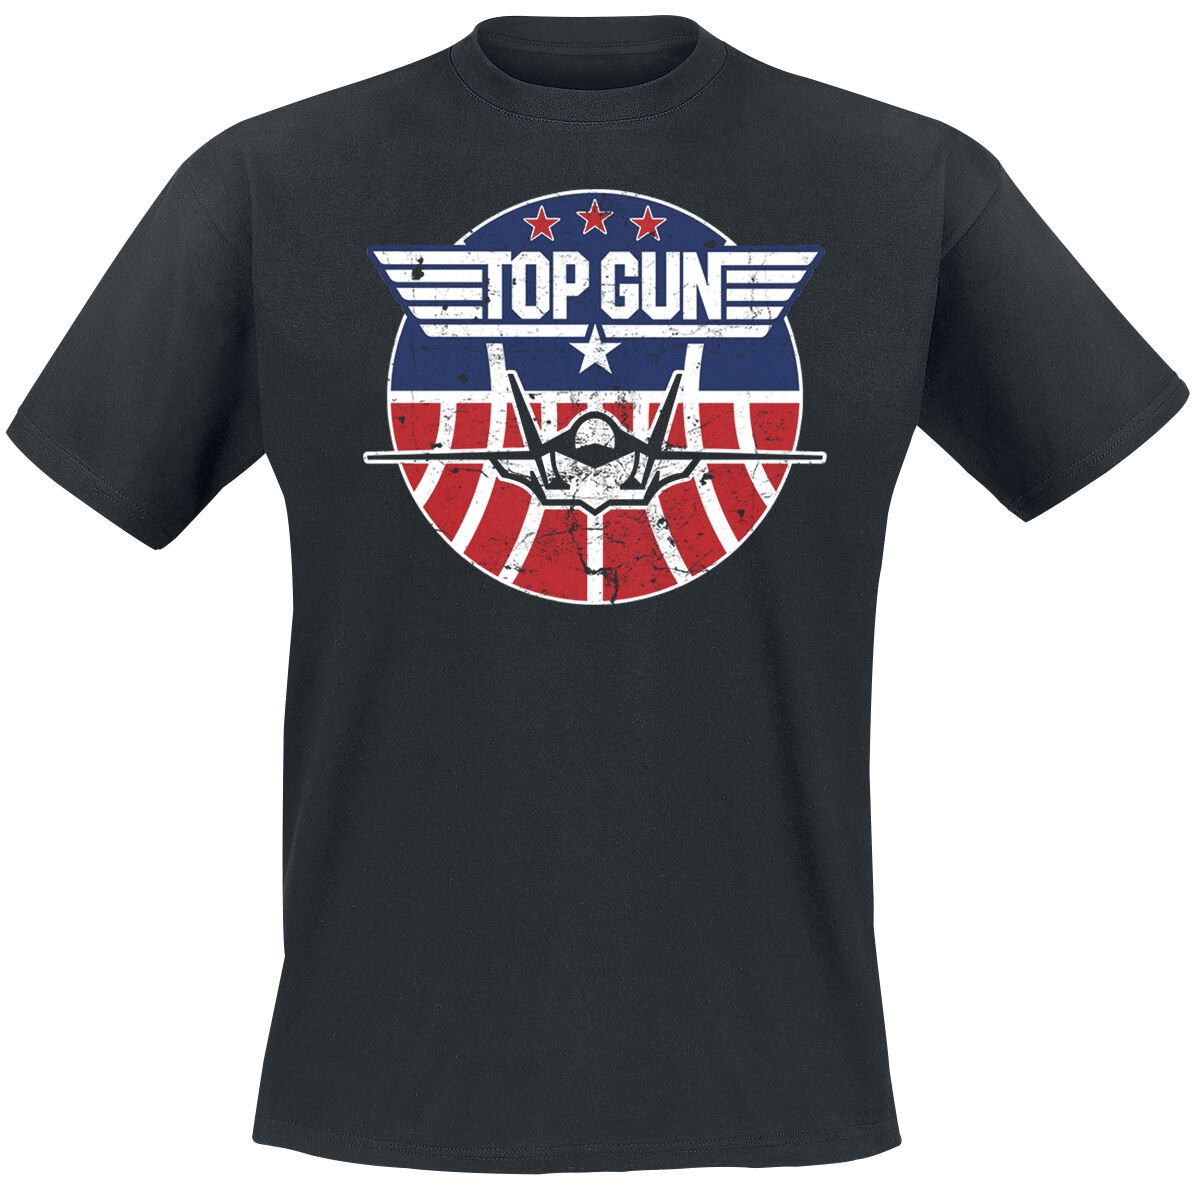 Top Gun T-Shirt - Maverick - Tomcat - S bis 5XL - für Männer - Größe 4XL - schwarz  - Lizenzierter Fanartikel